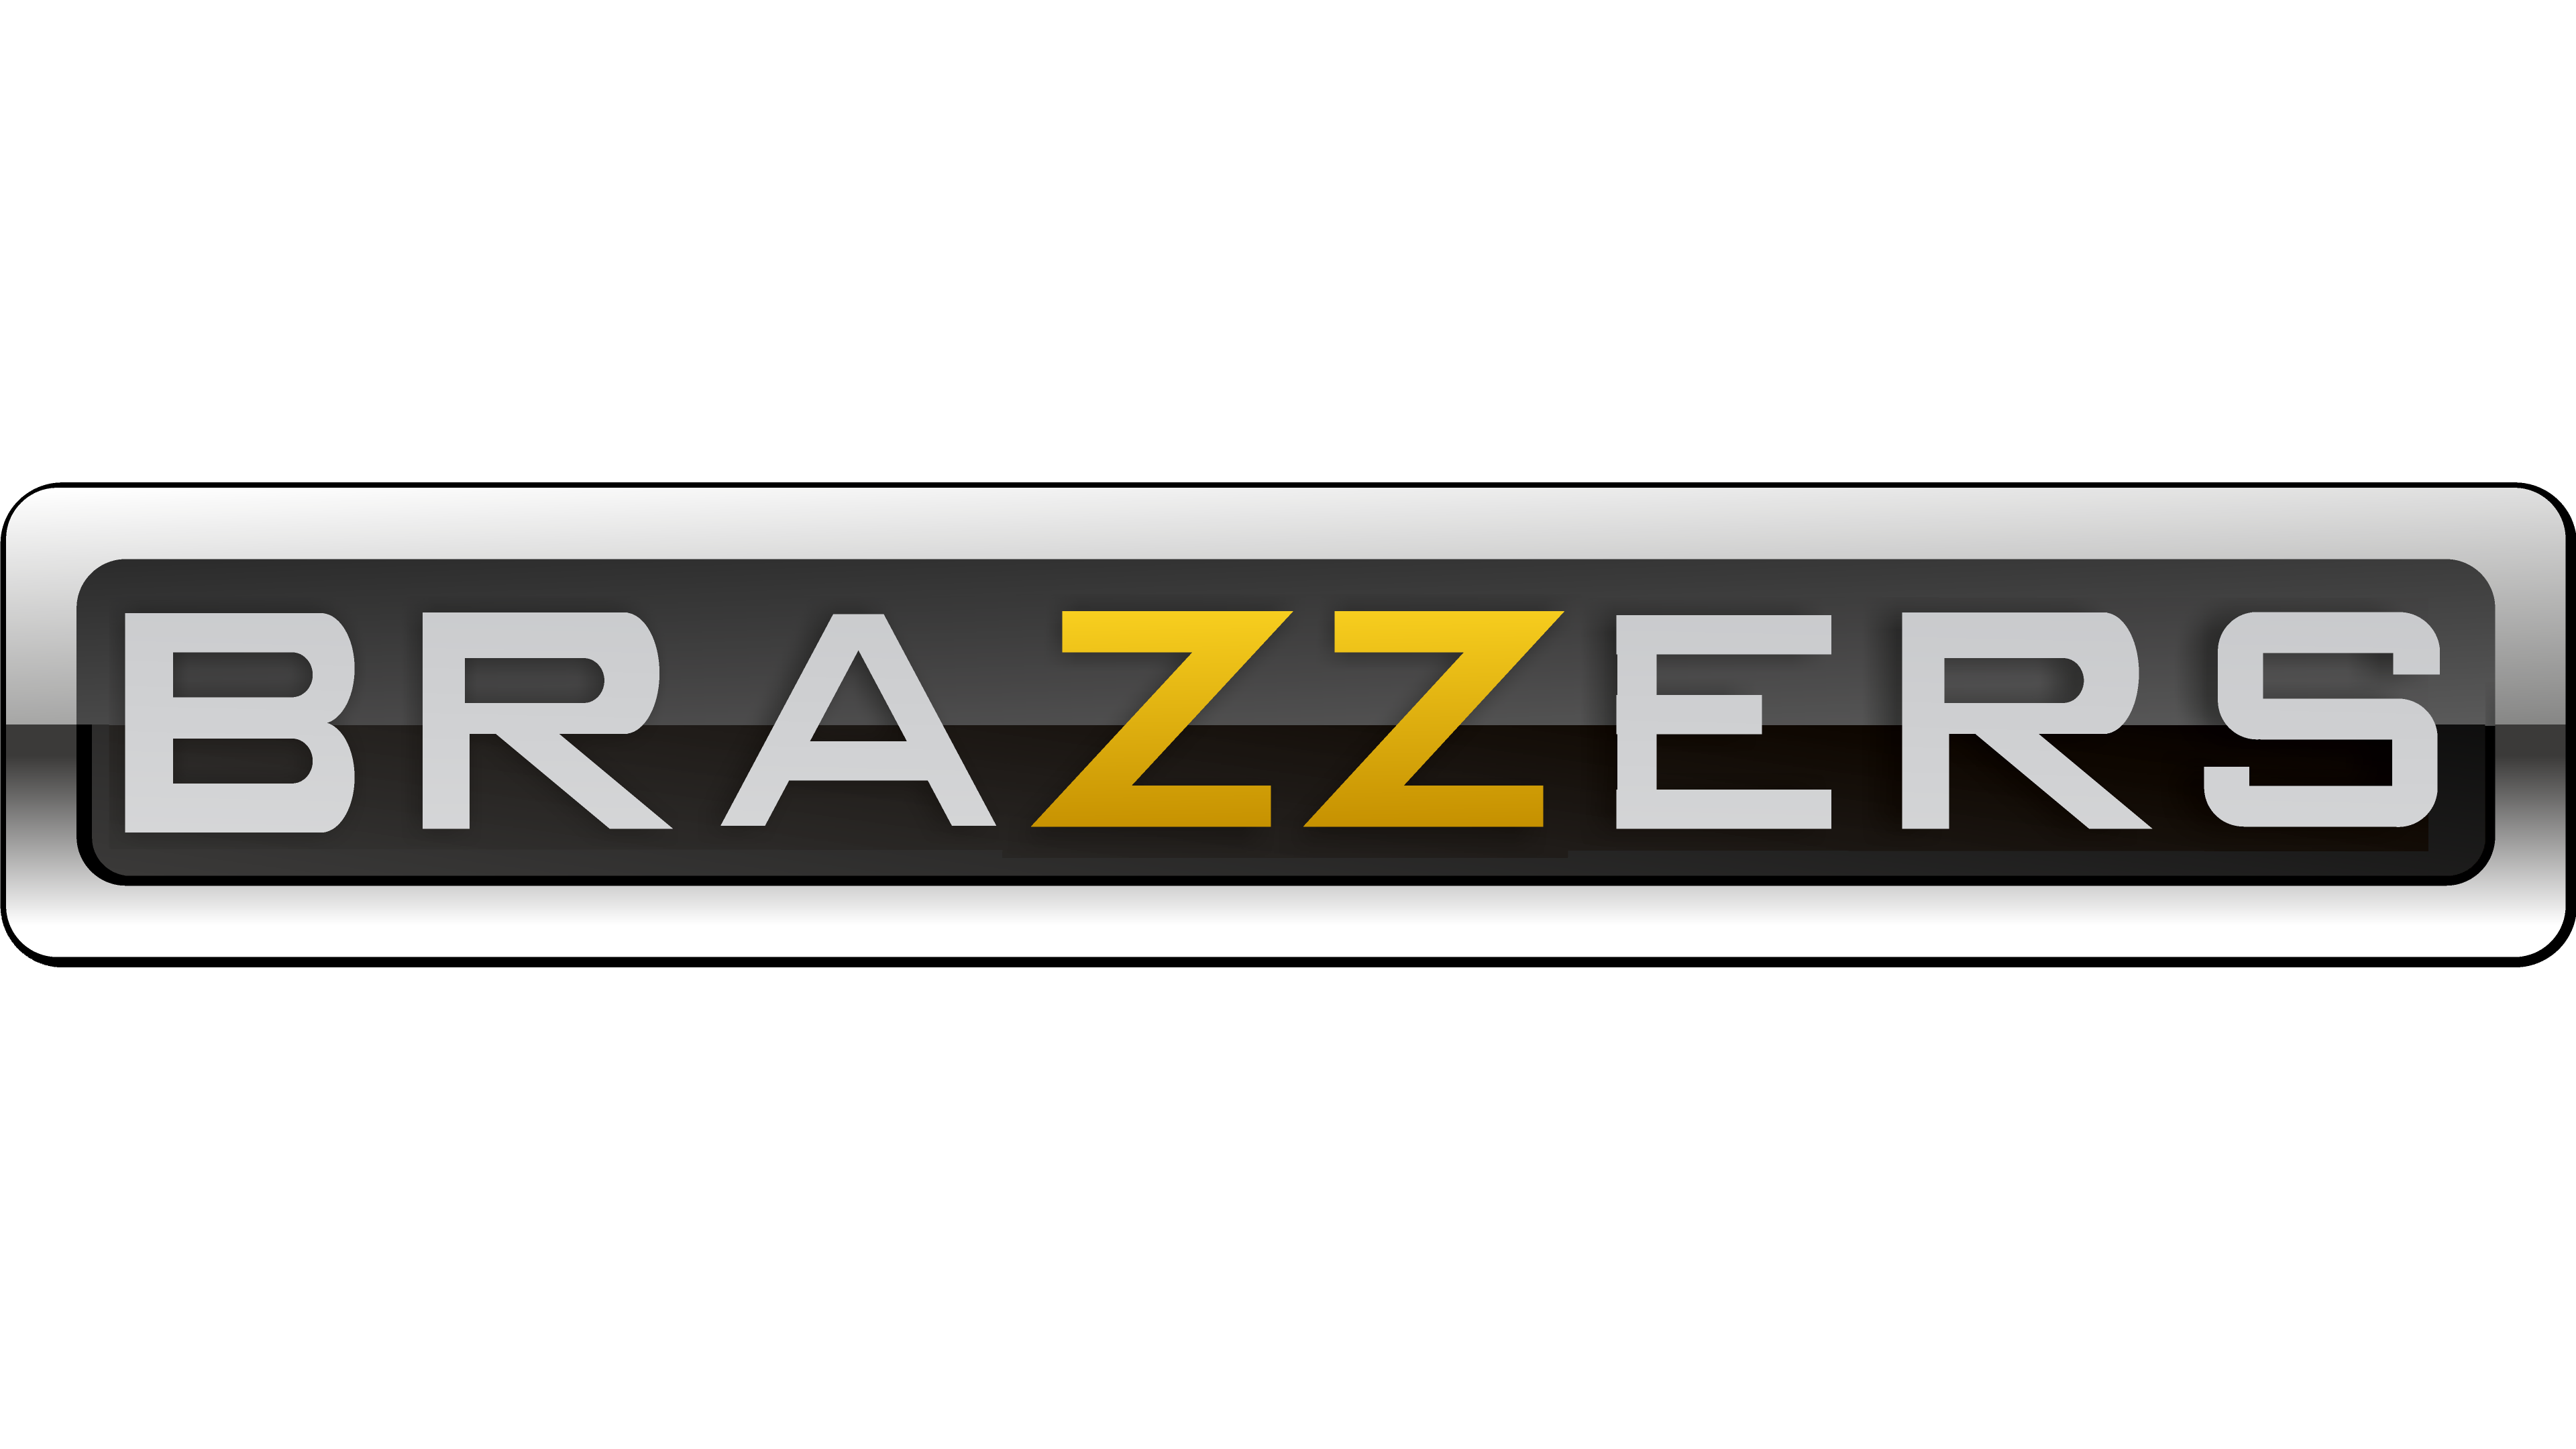 Brazzers network.com